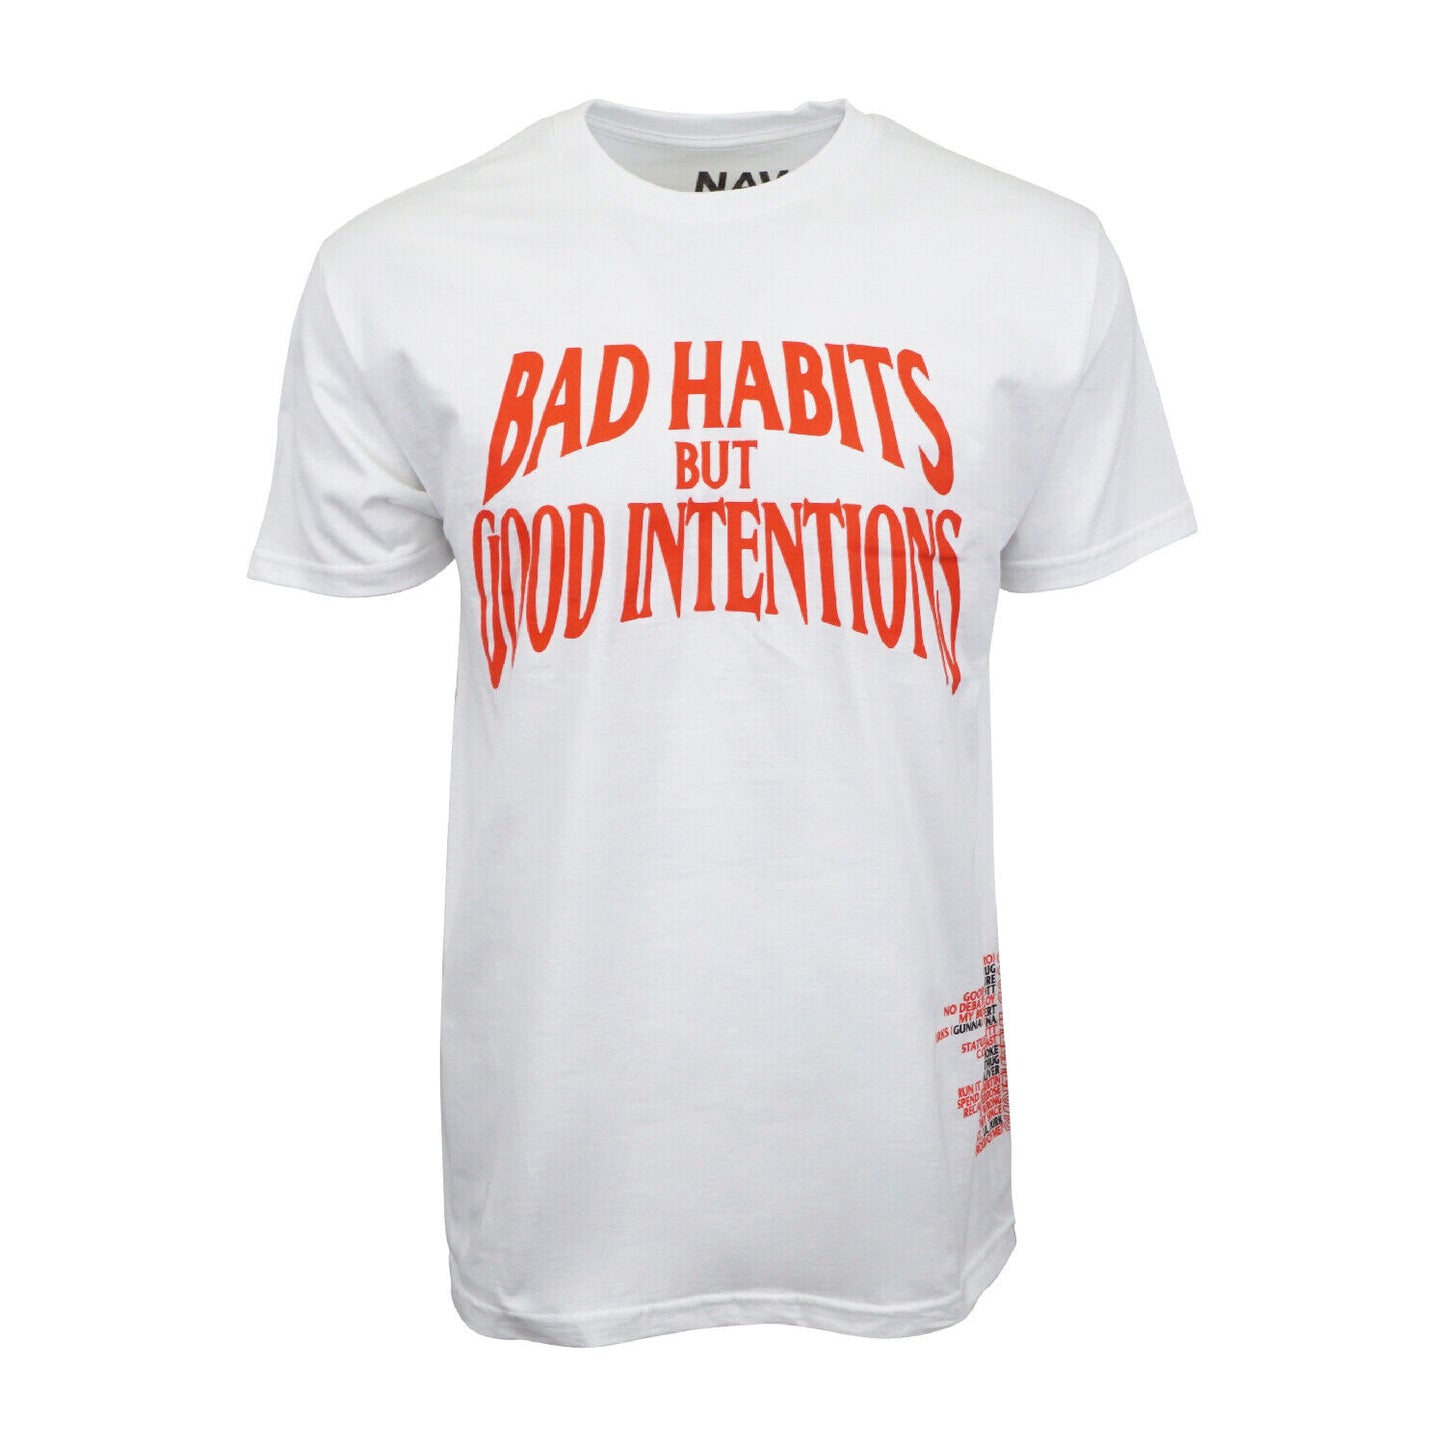 Vlone X Nav Bad Habits Good Intentions T Shirt